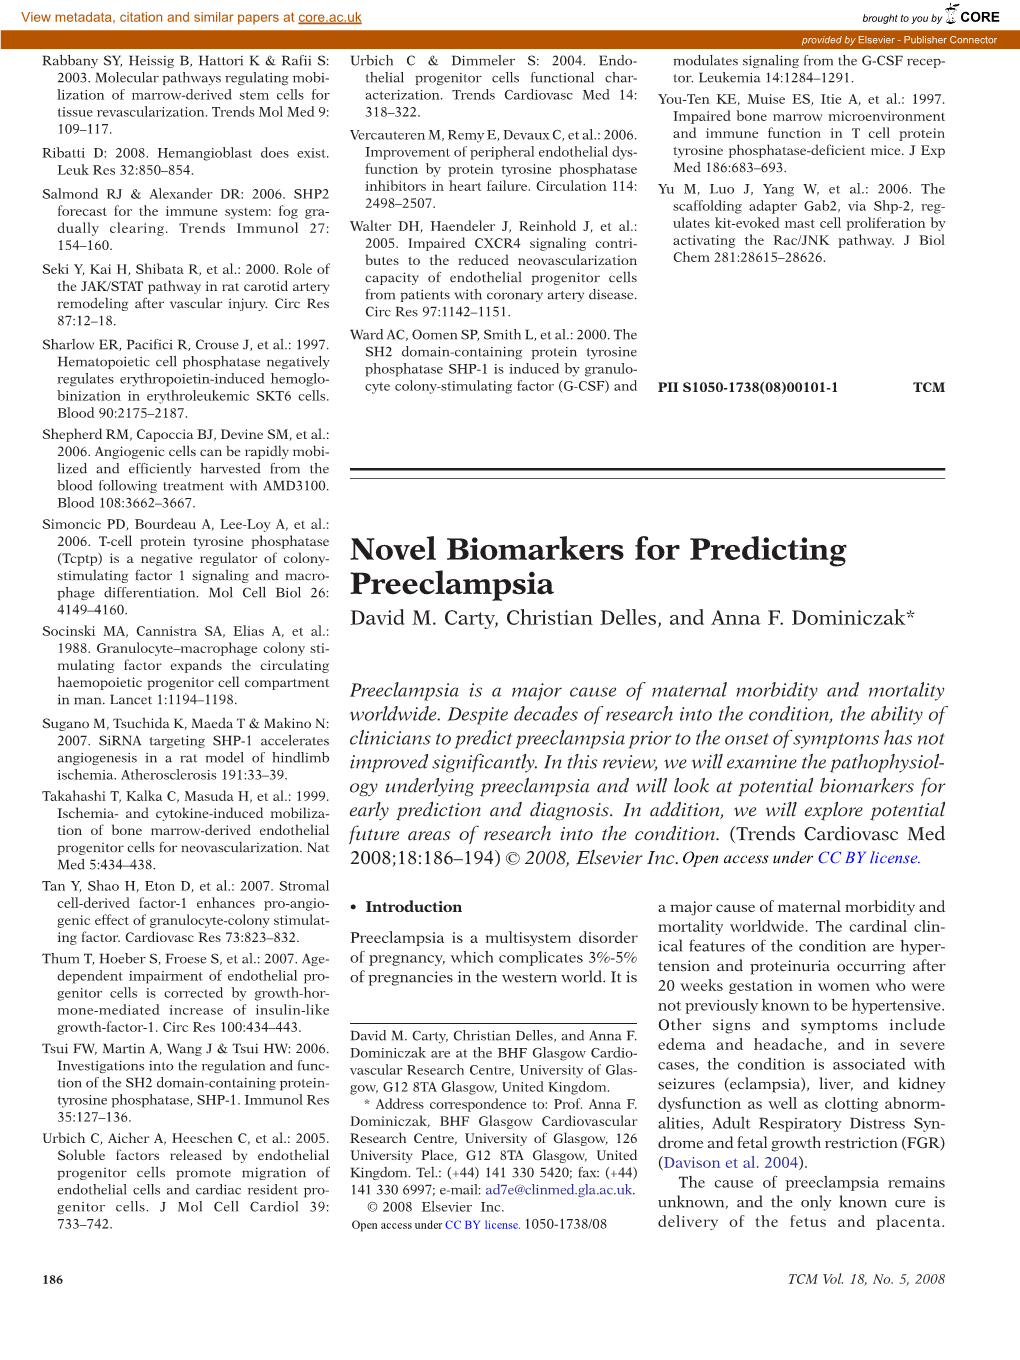 Novel Biomarkers for Predicting Preeclampsia